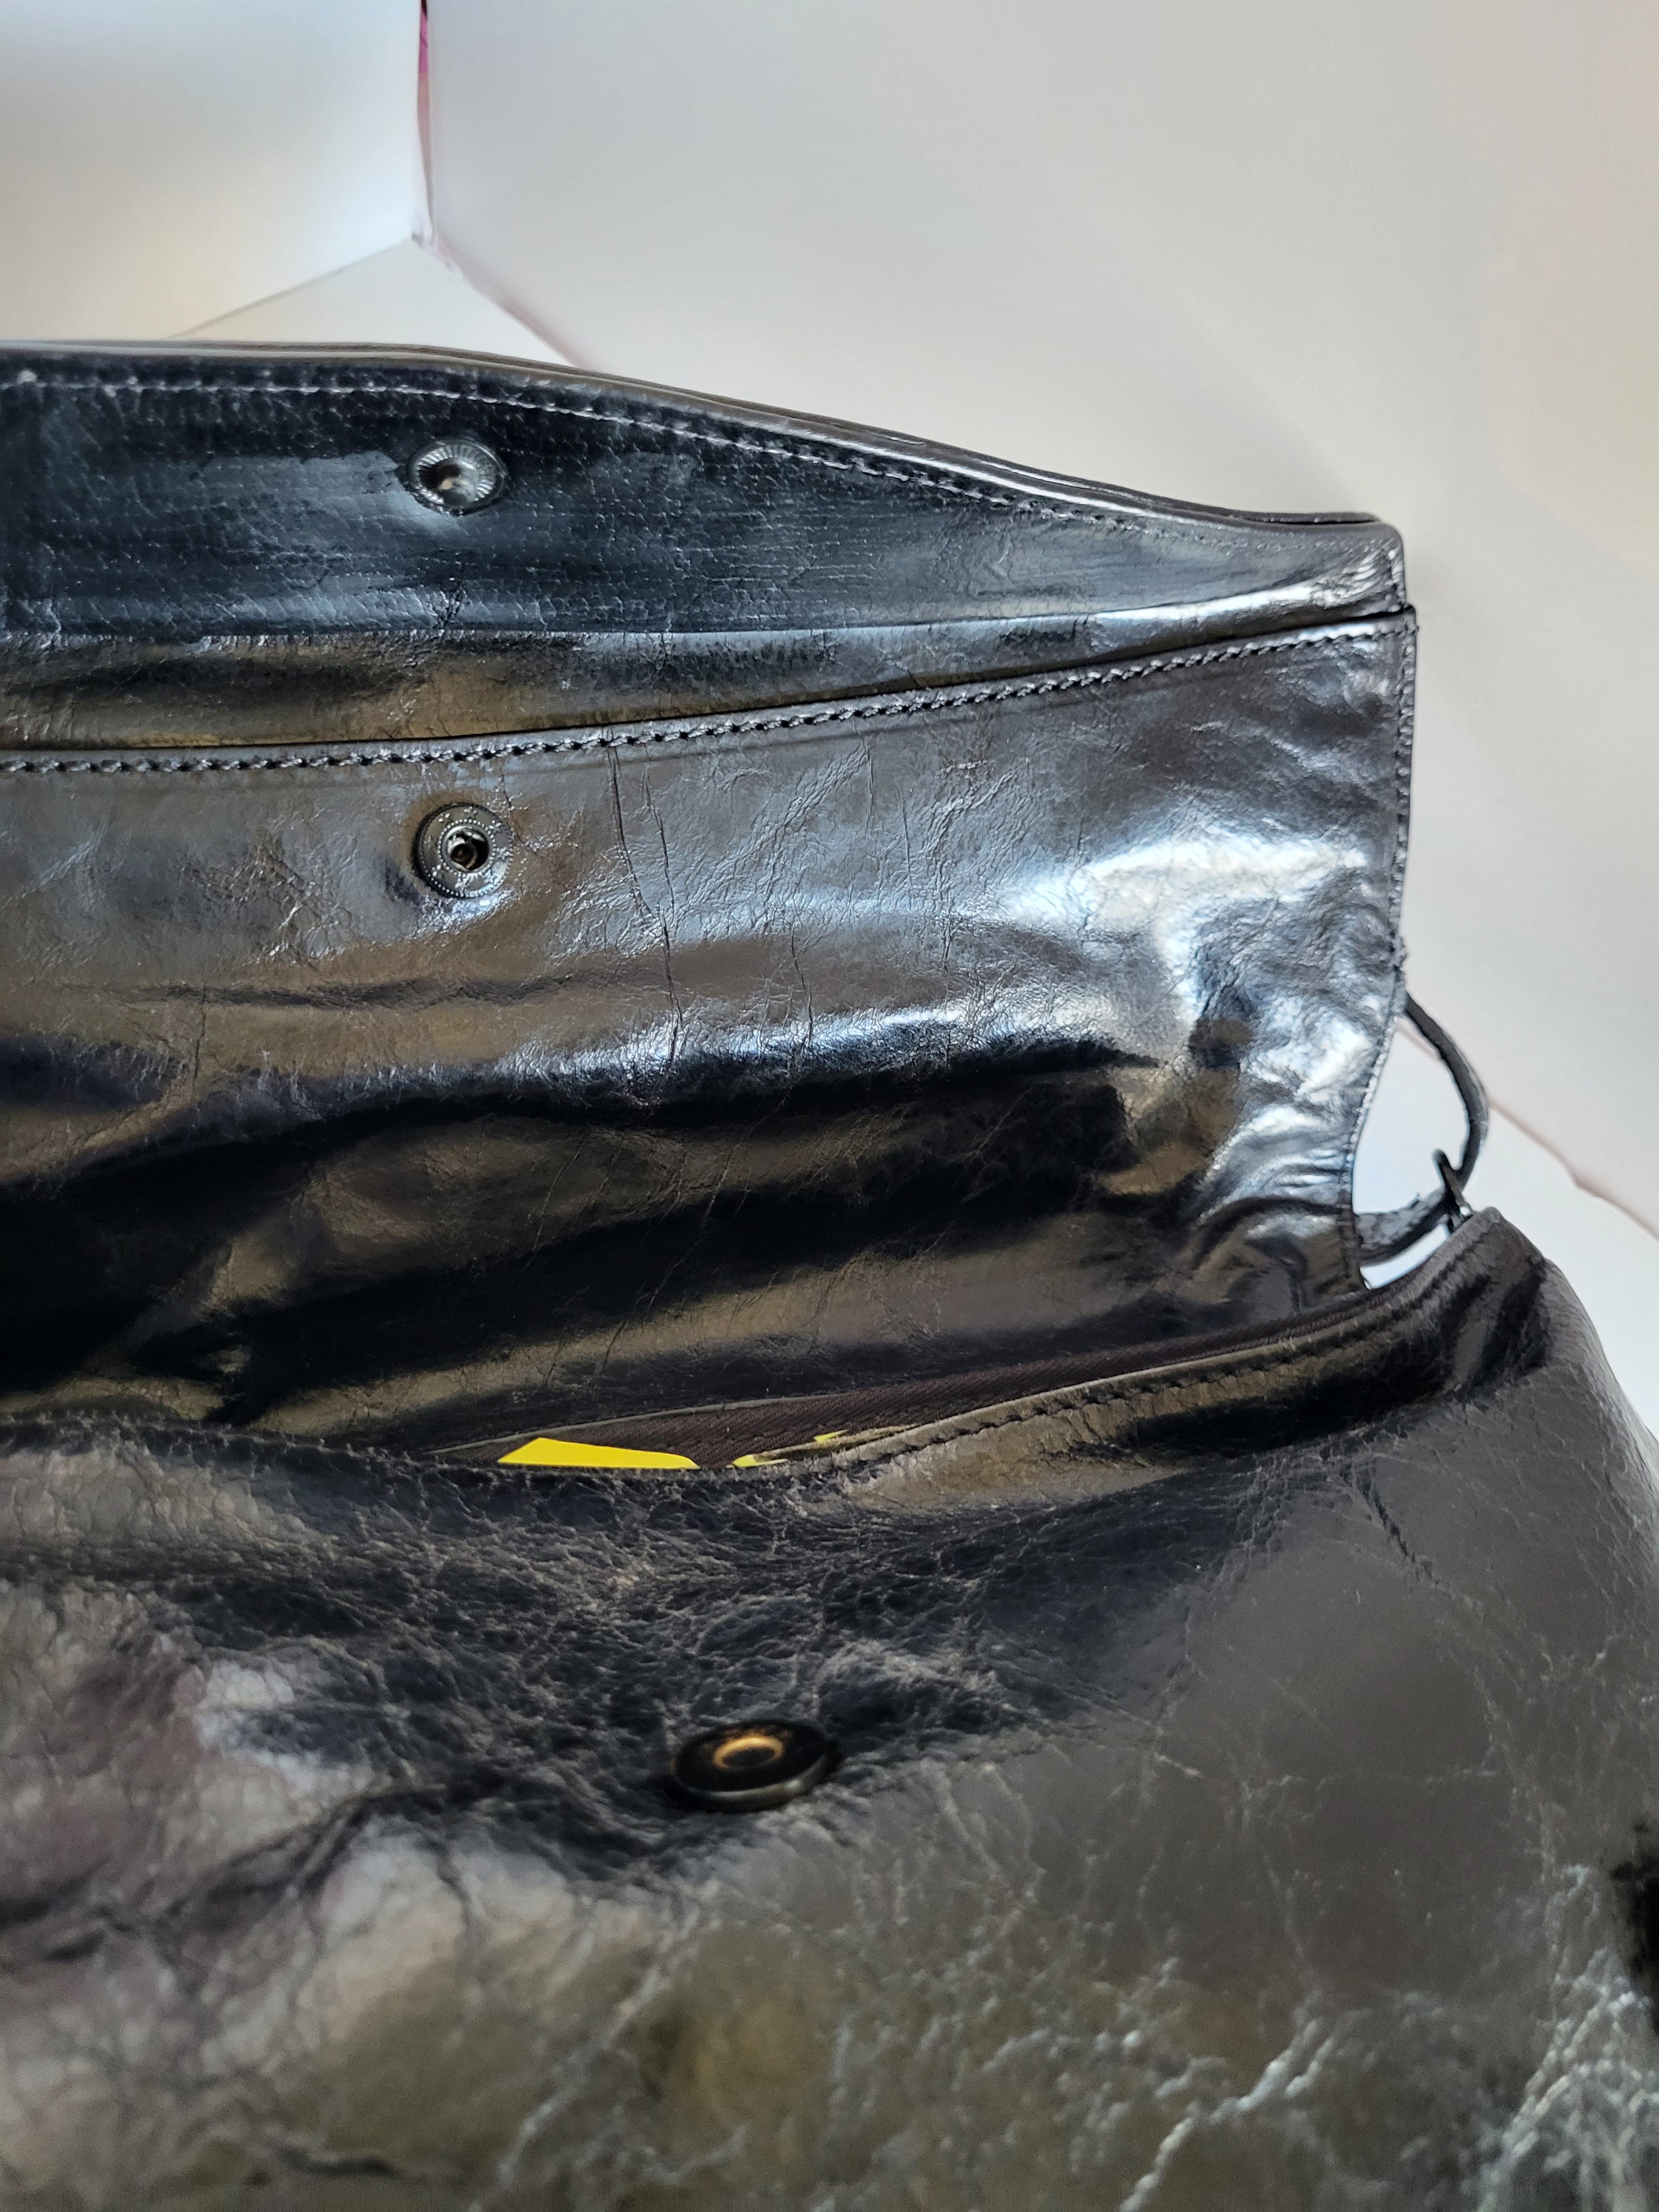 Danier Leather Moto Style Shoulder/Crossbody Bag